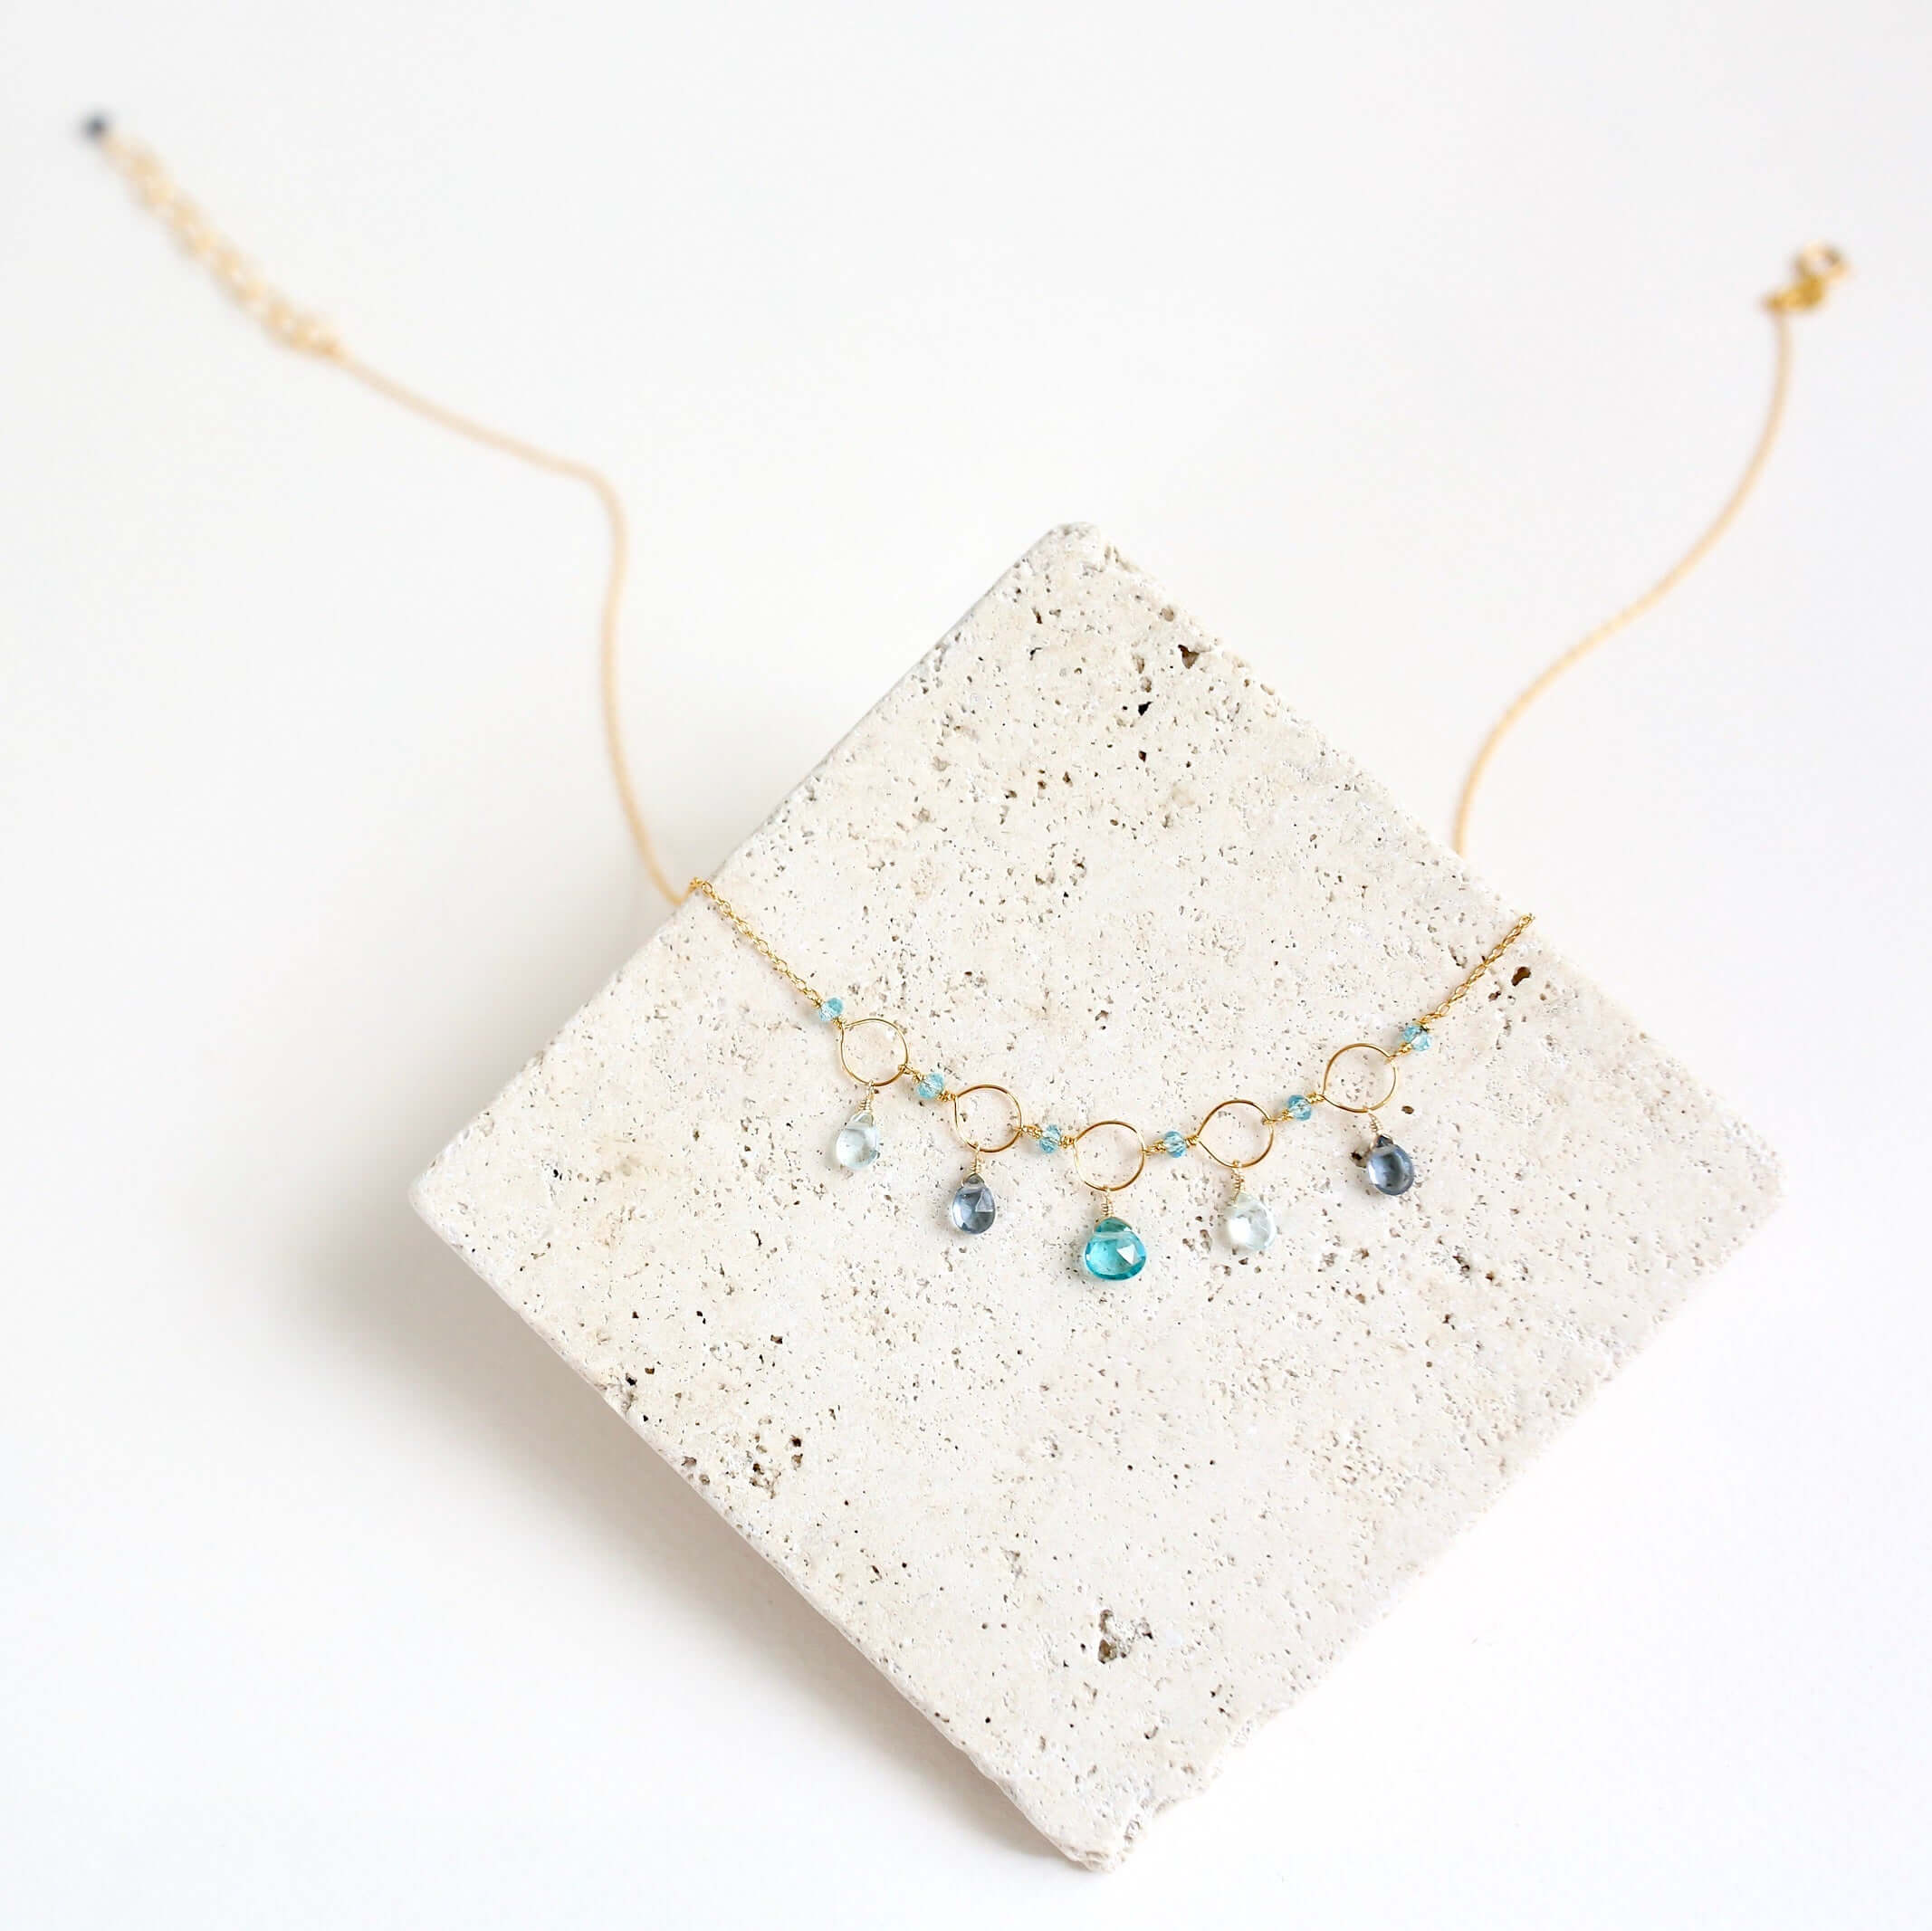 Blue Gemstone Gold Necklace